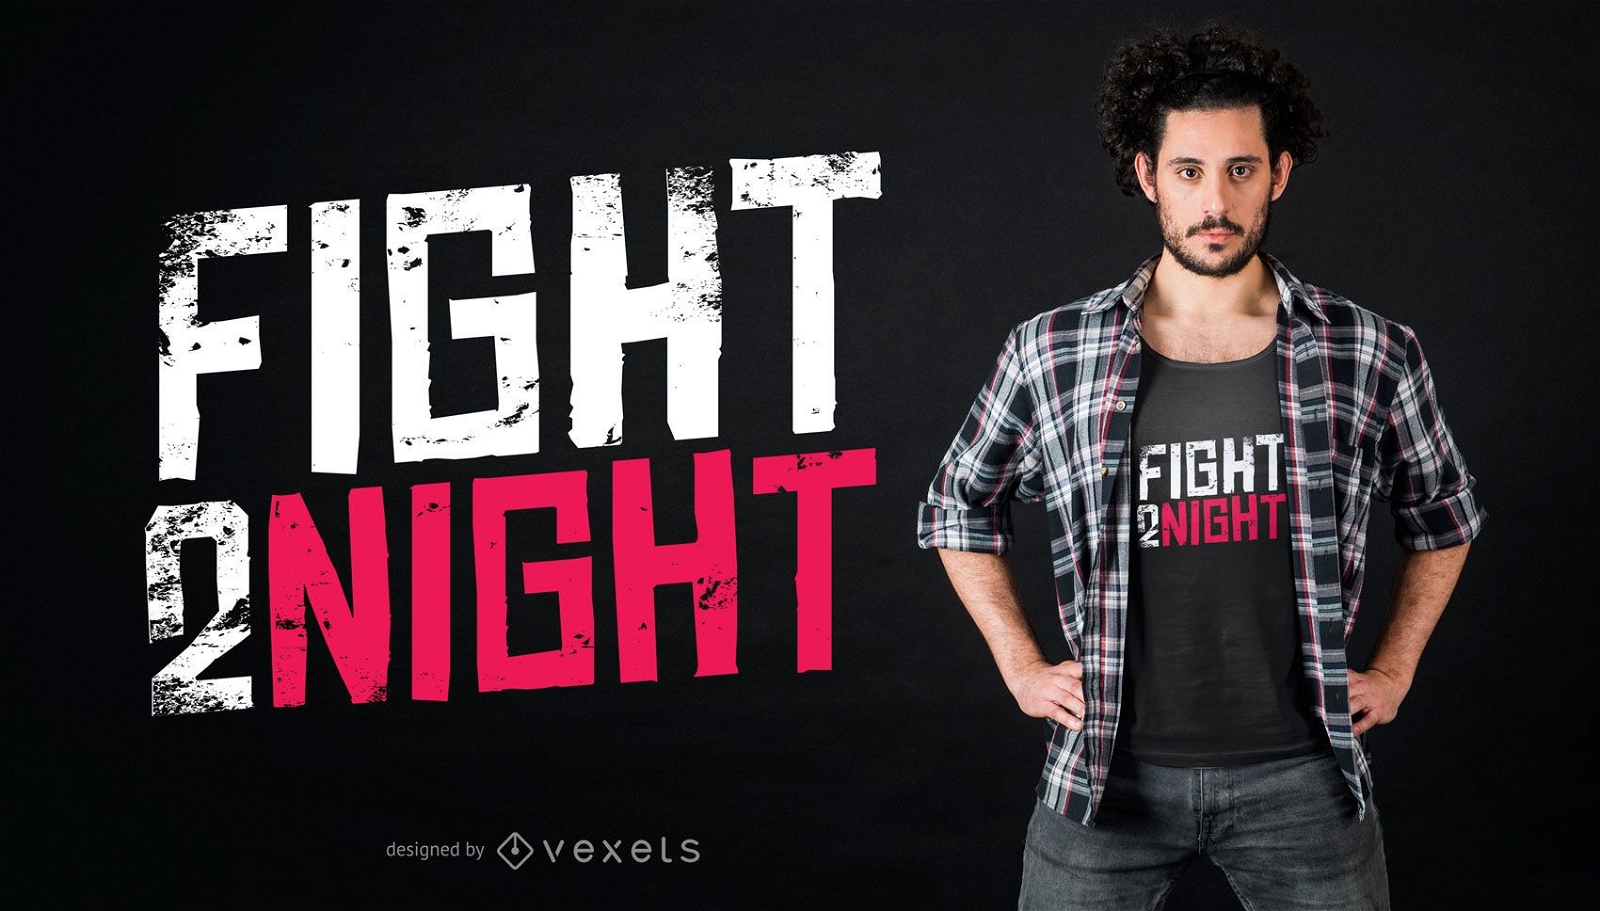 Fight tonight t-shirt design